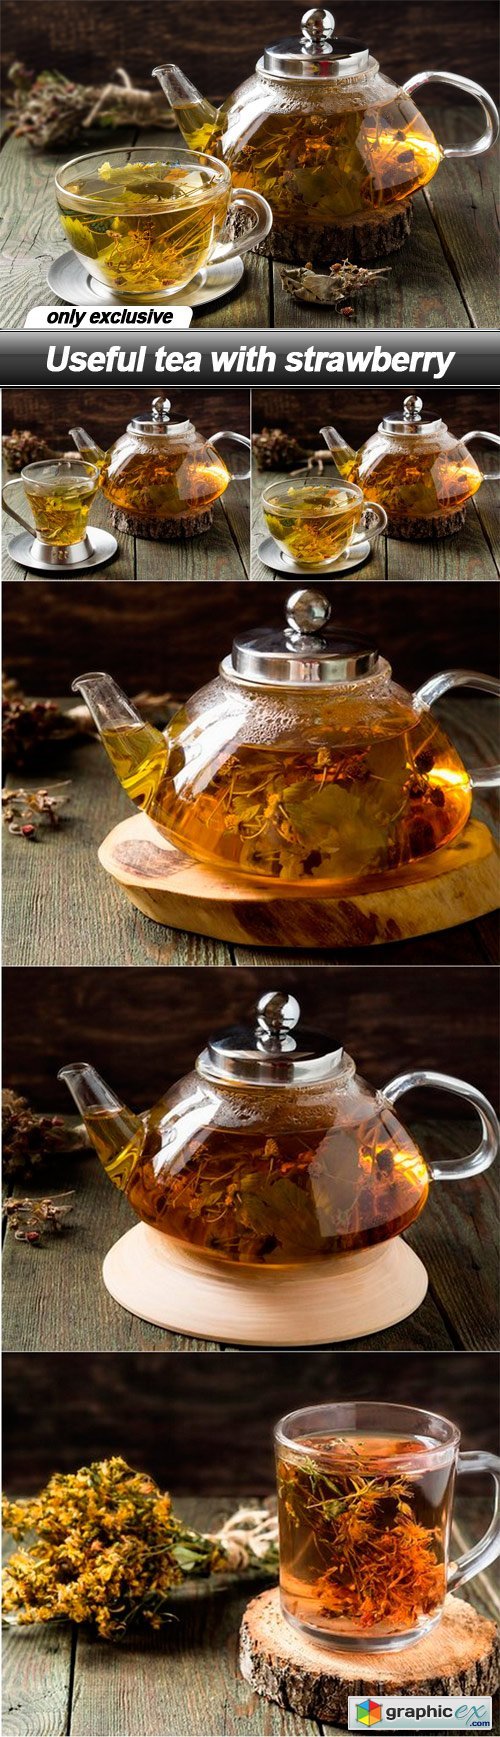  Useful tea with strawberry - 6 UHQ JPEG